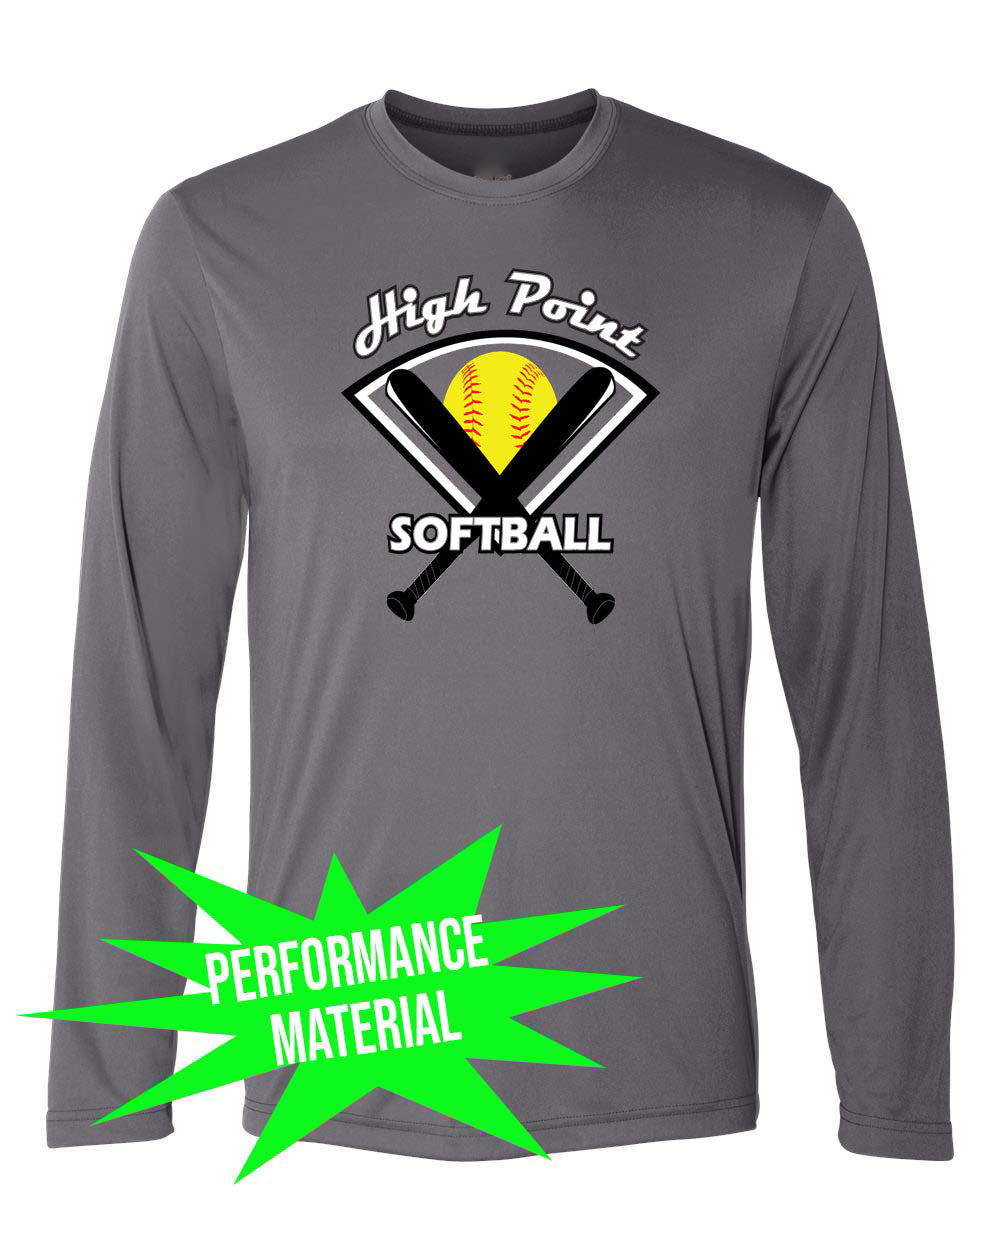 High Point Softball Performance Material Design 4 Long Sleeve Shirt